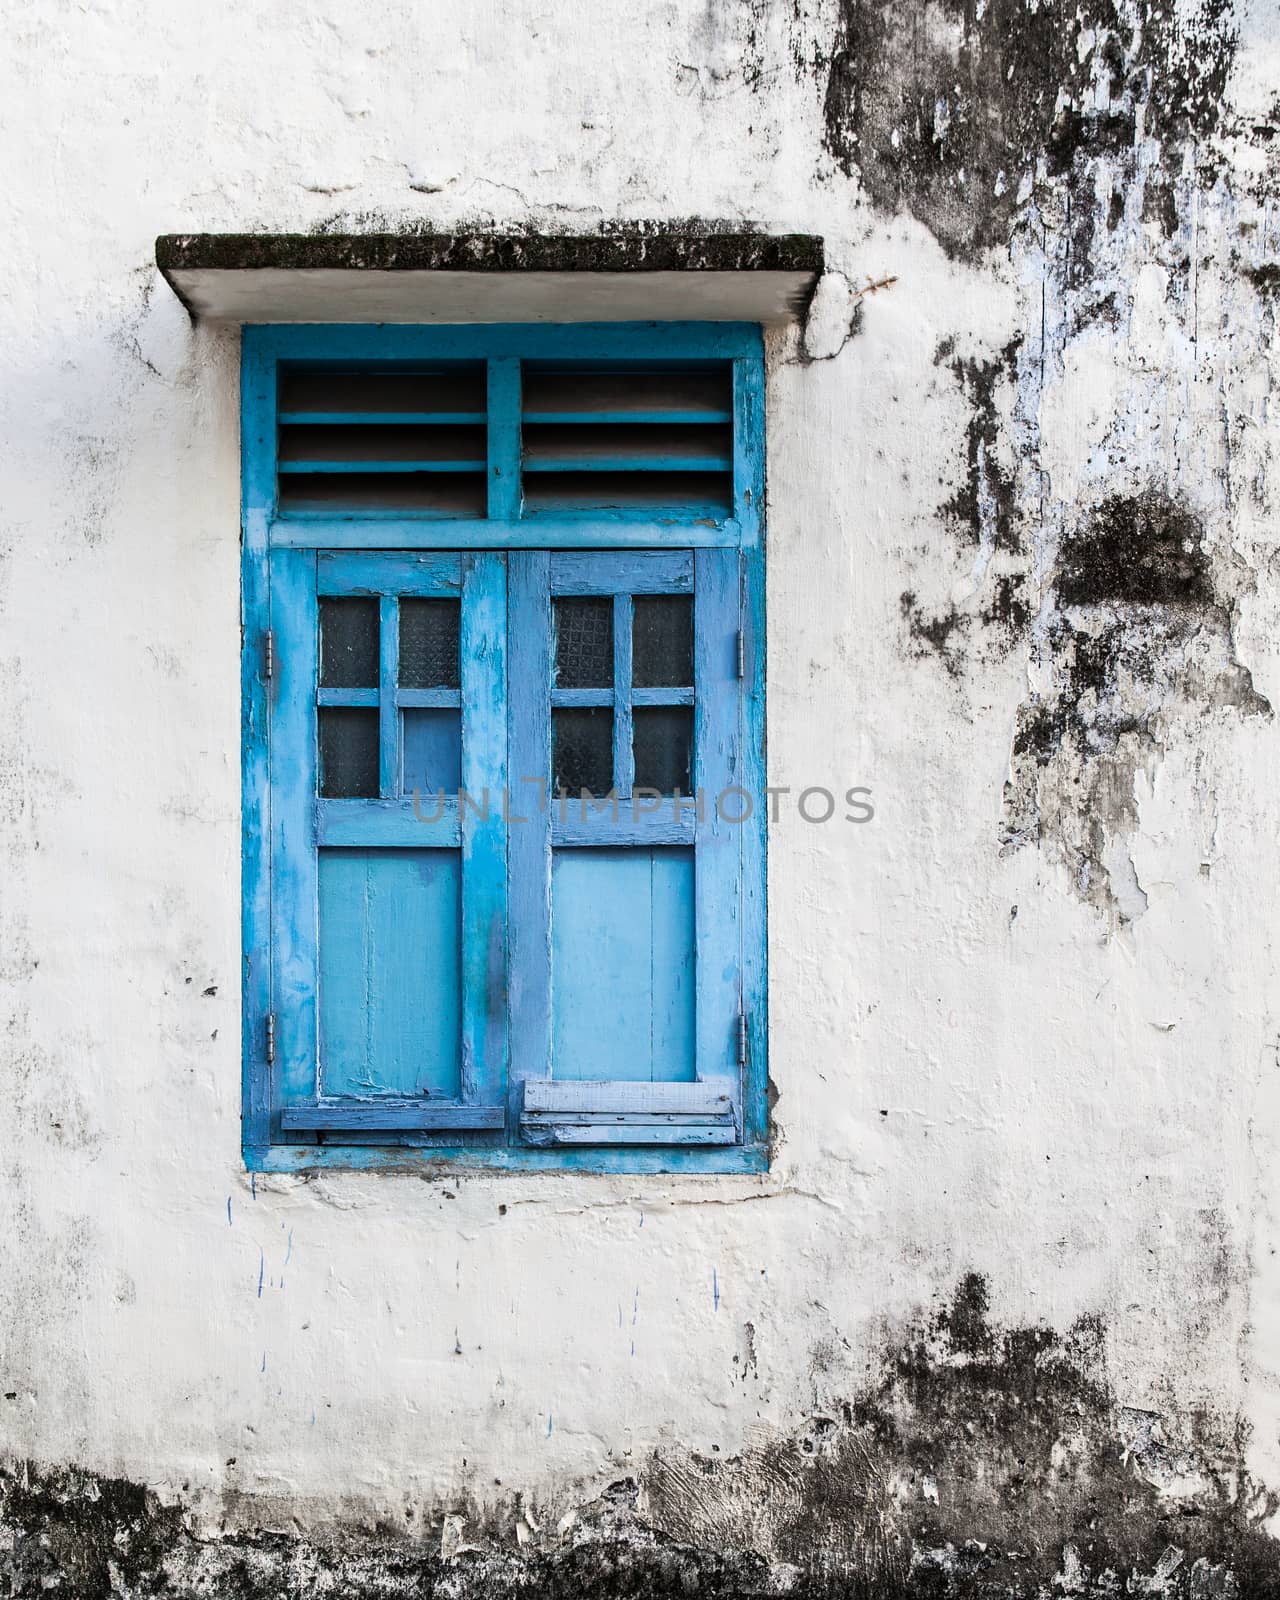 Vivid blue wooden window and grunge wall by juhku